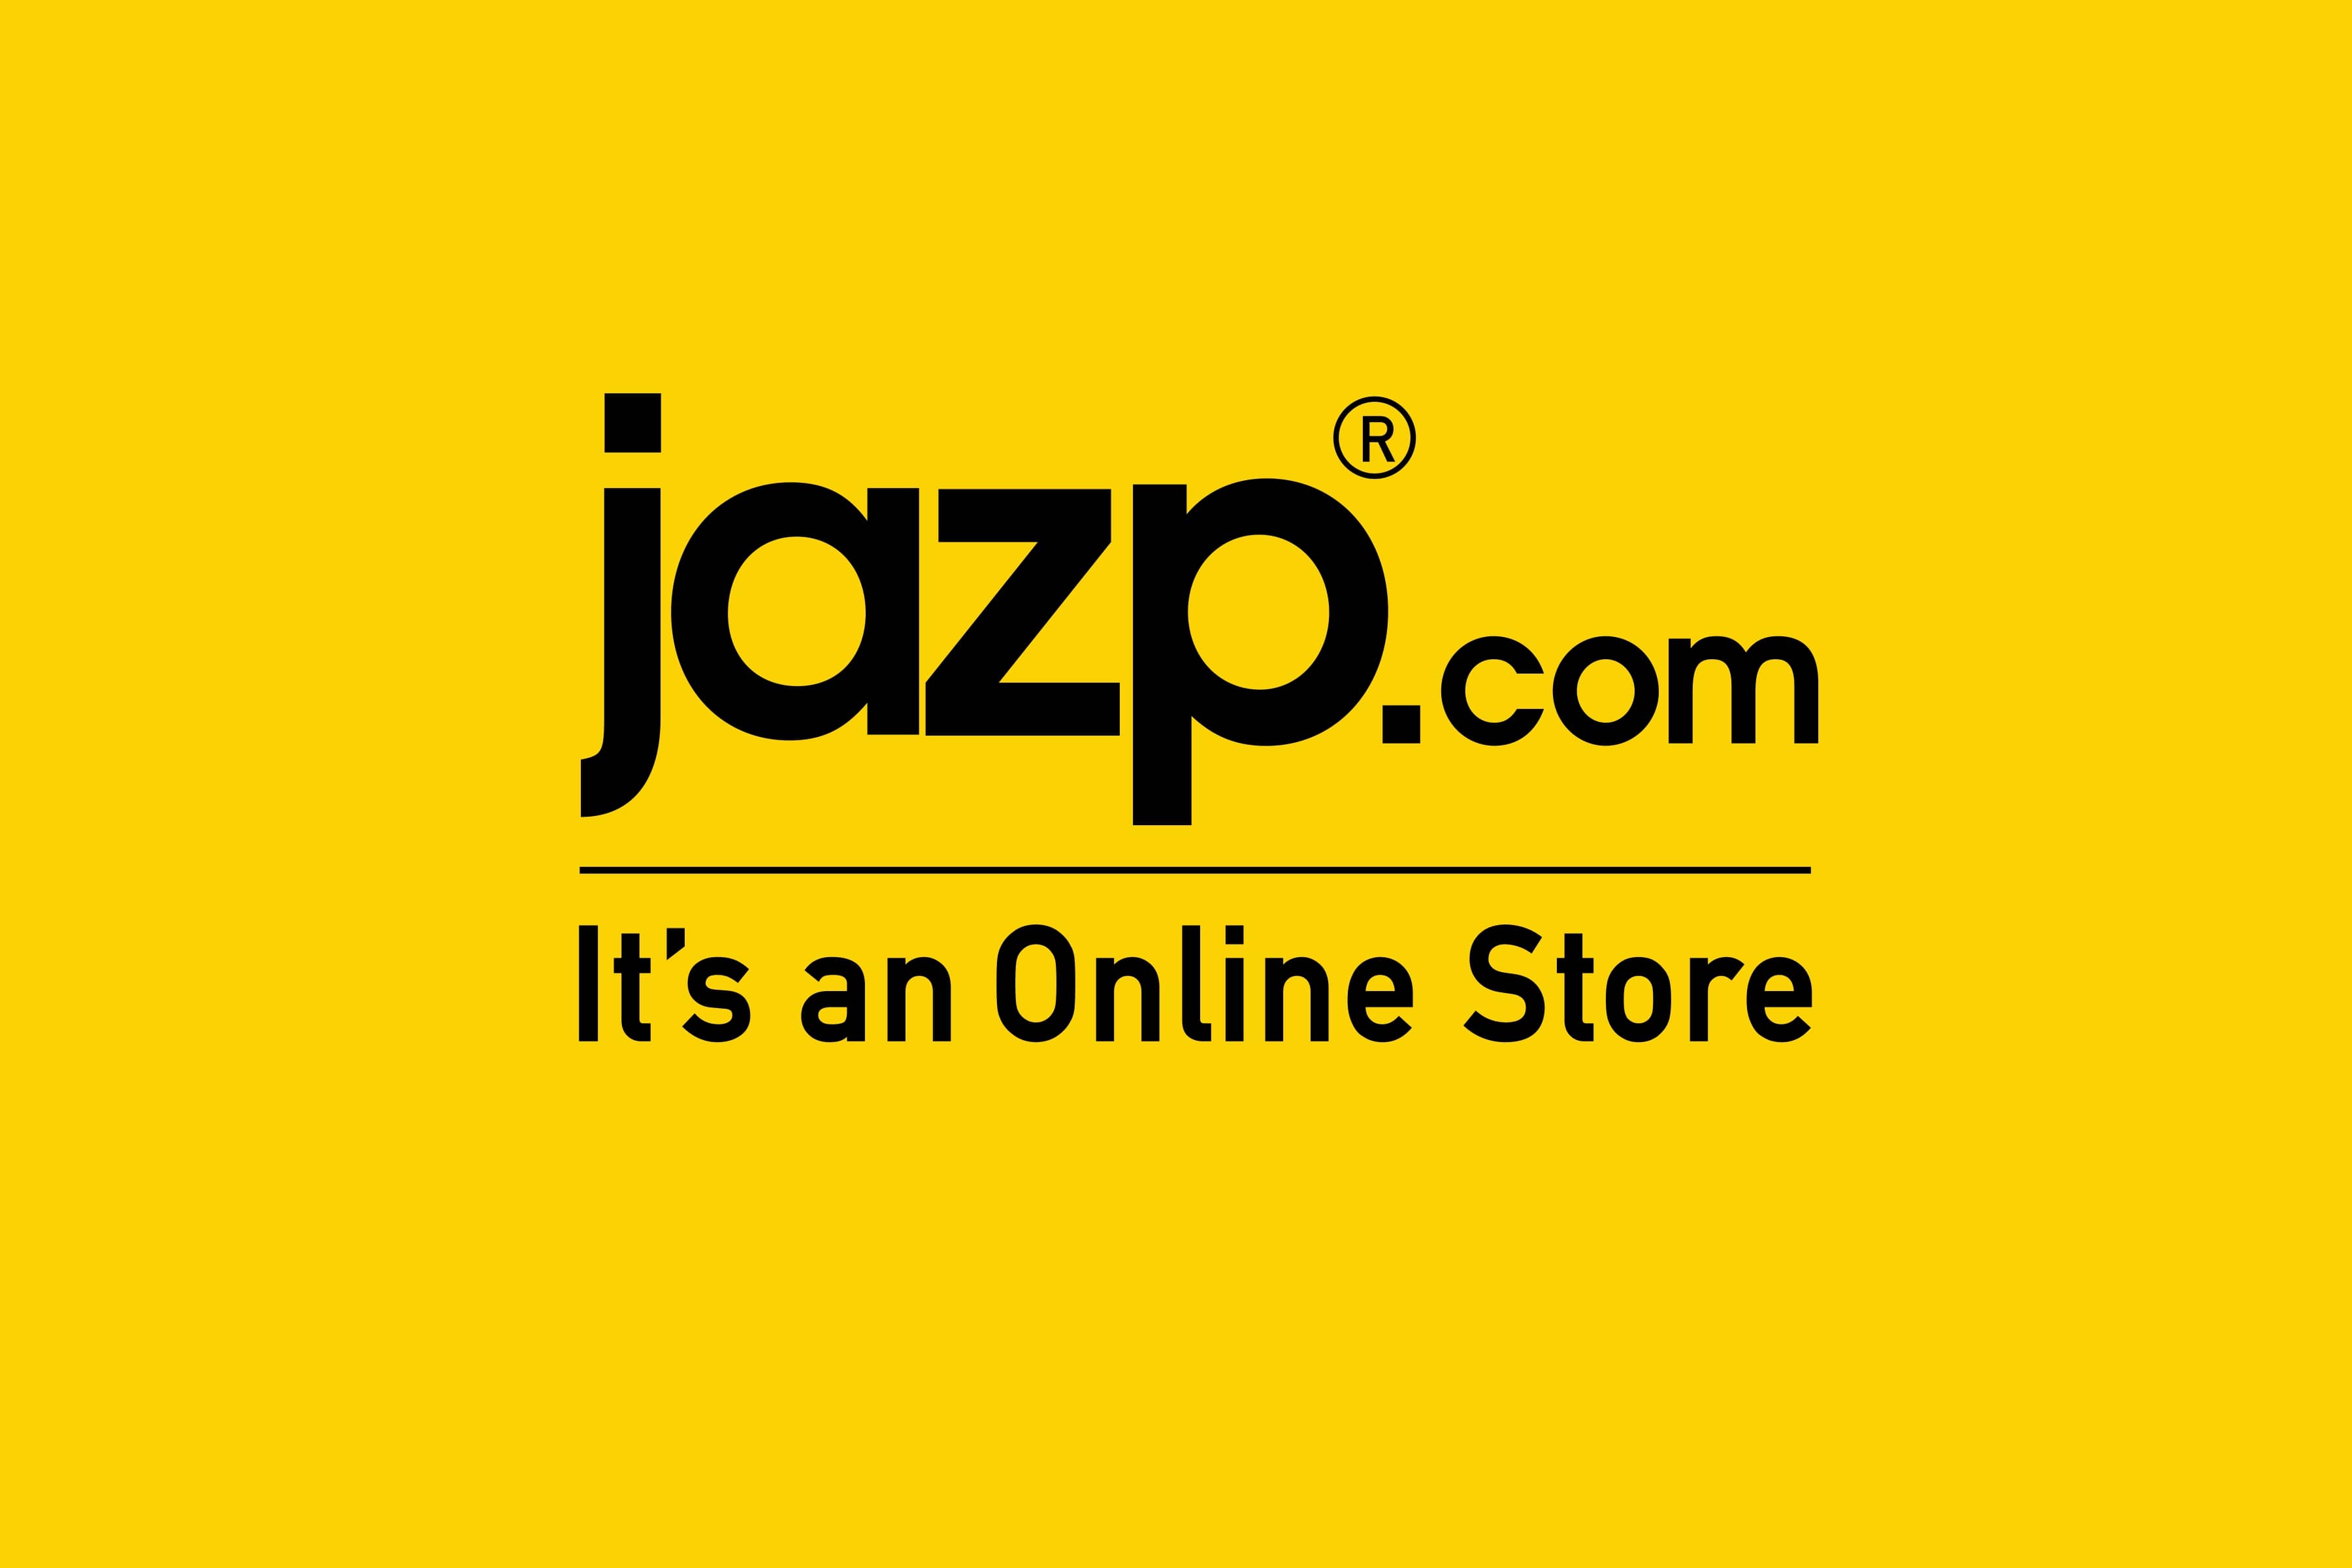 jazp.com